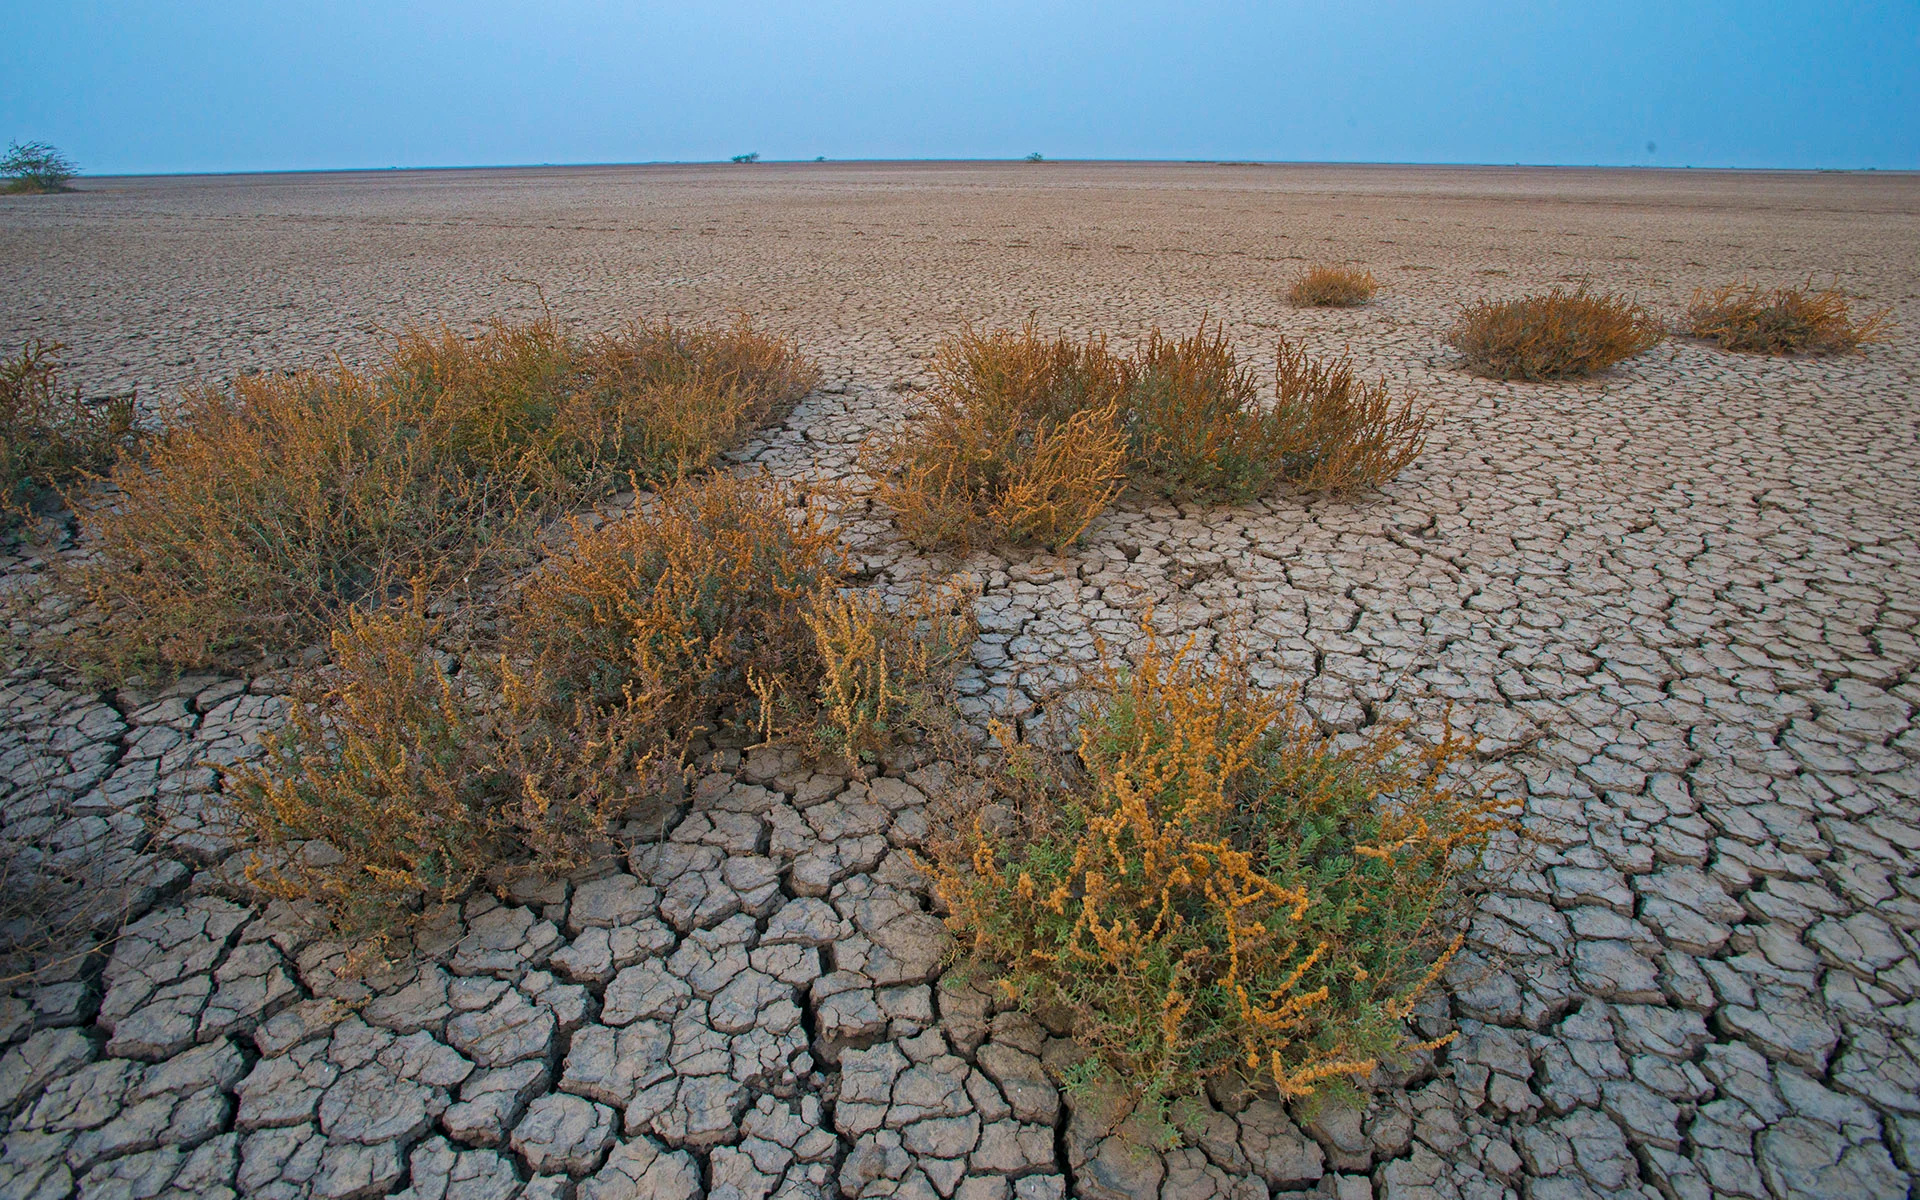 The Perpetual Desert Mud Flats of Meldi no Dhoro in India by Dhritiman Mukherjee